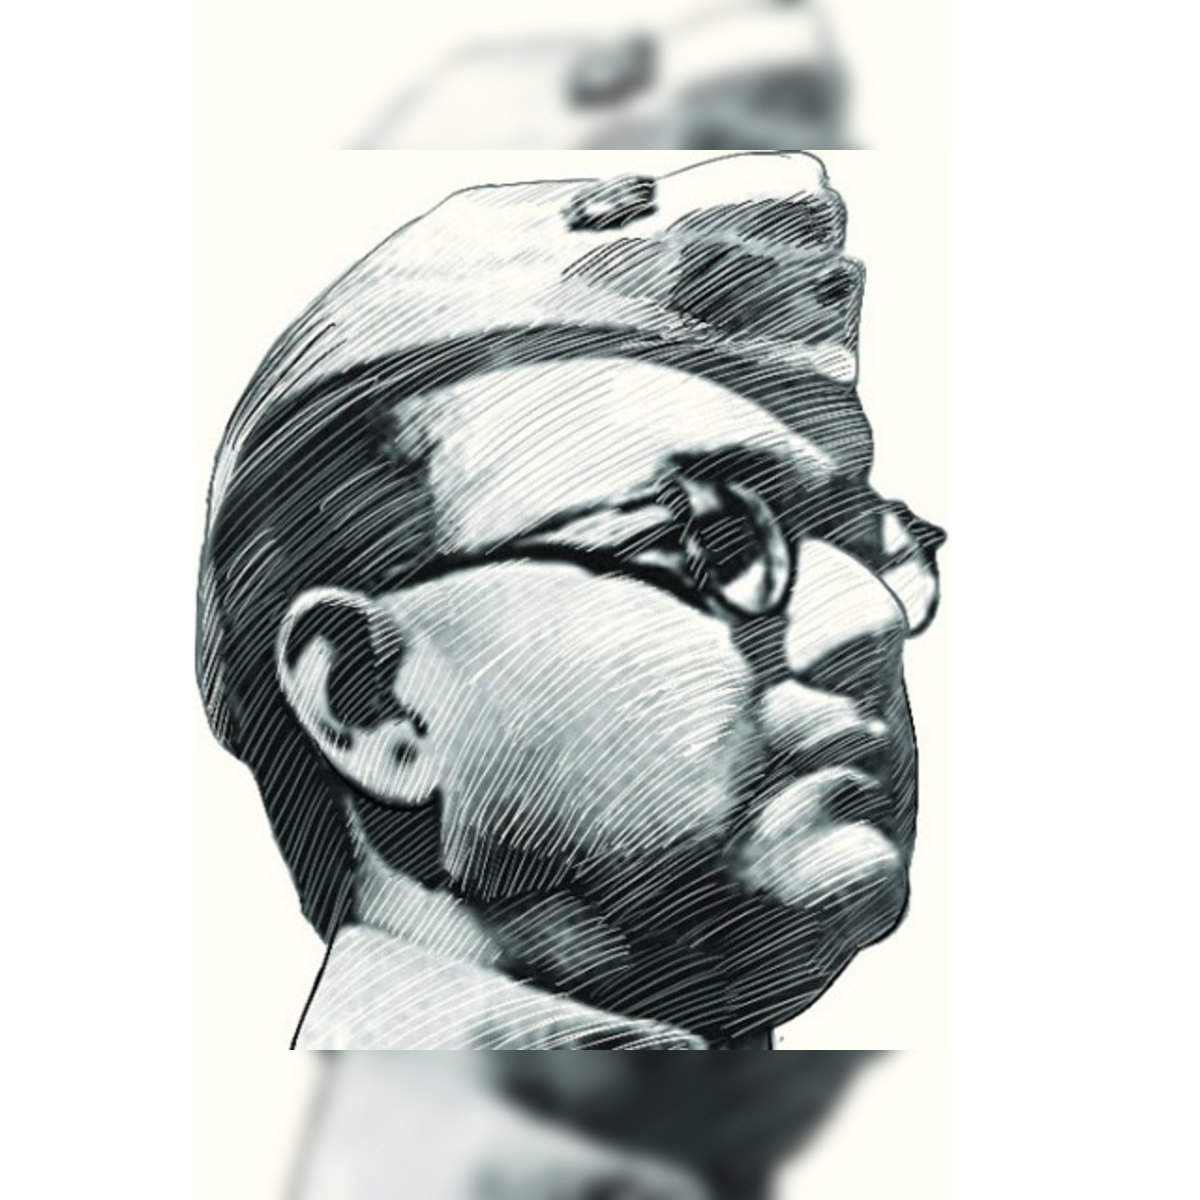 Poster on netaji Subhash Chandra Bose – India NCC